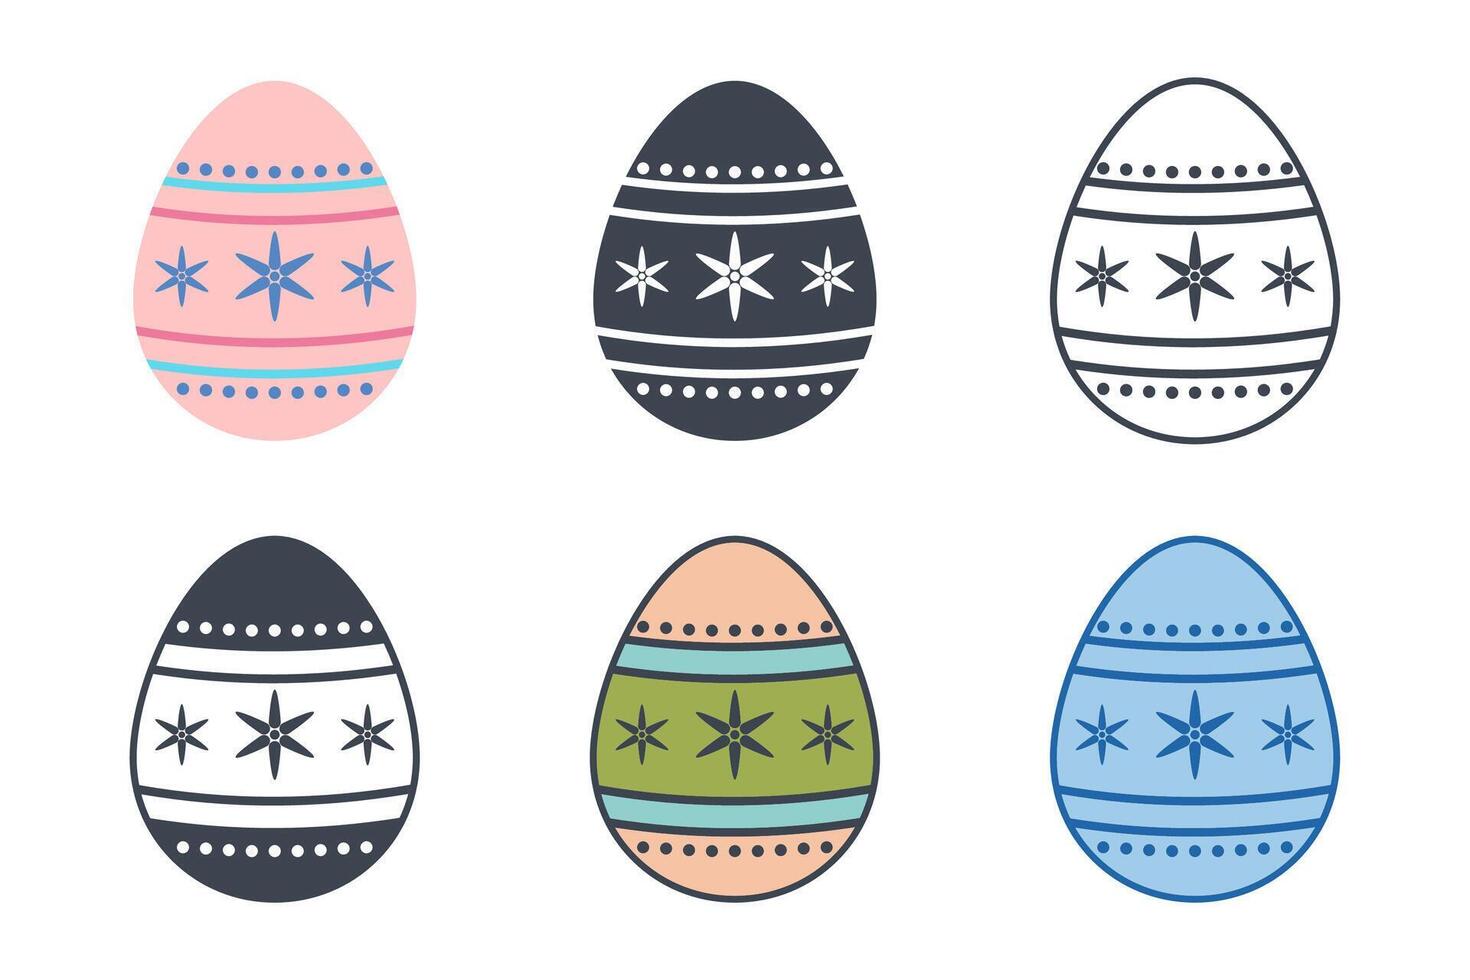 påsk dag festival. påsk ägg ikoner på vit bakgrund. vektor illustration